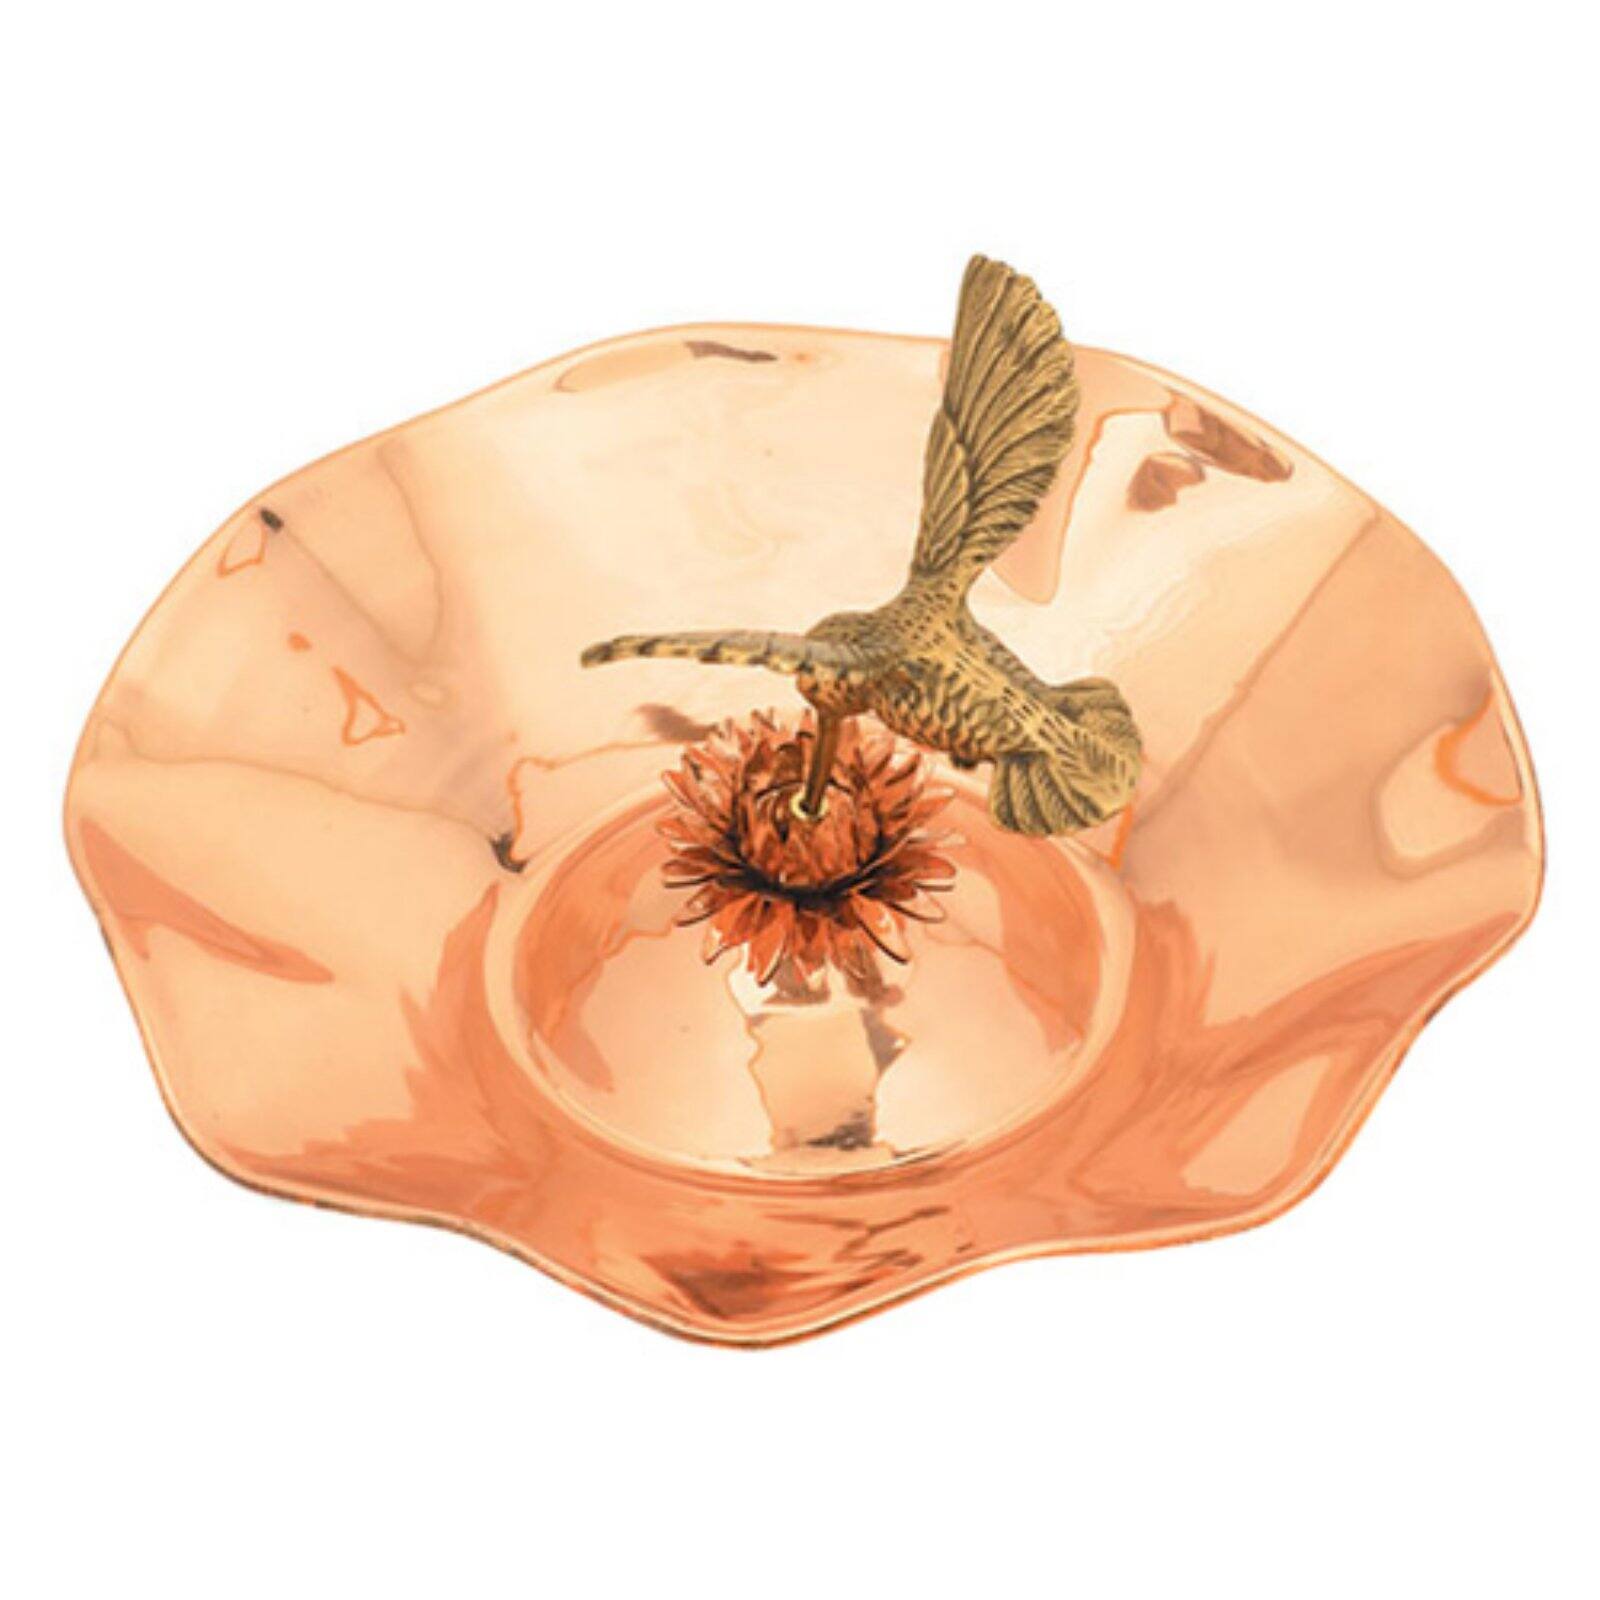 ACHLA Designs Bowl Hummingbird Birdbath - image 1 of 2